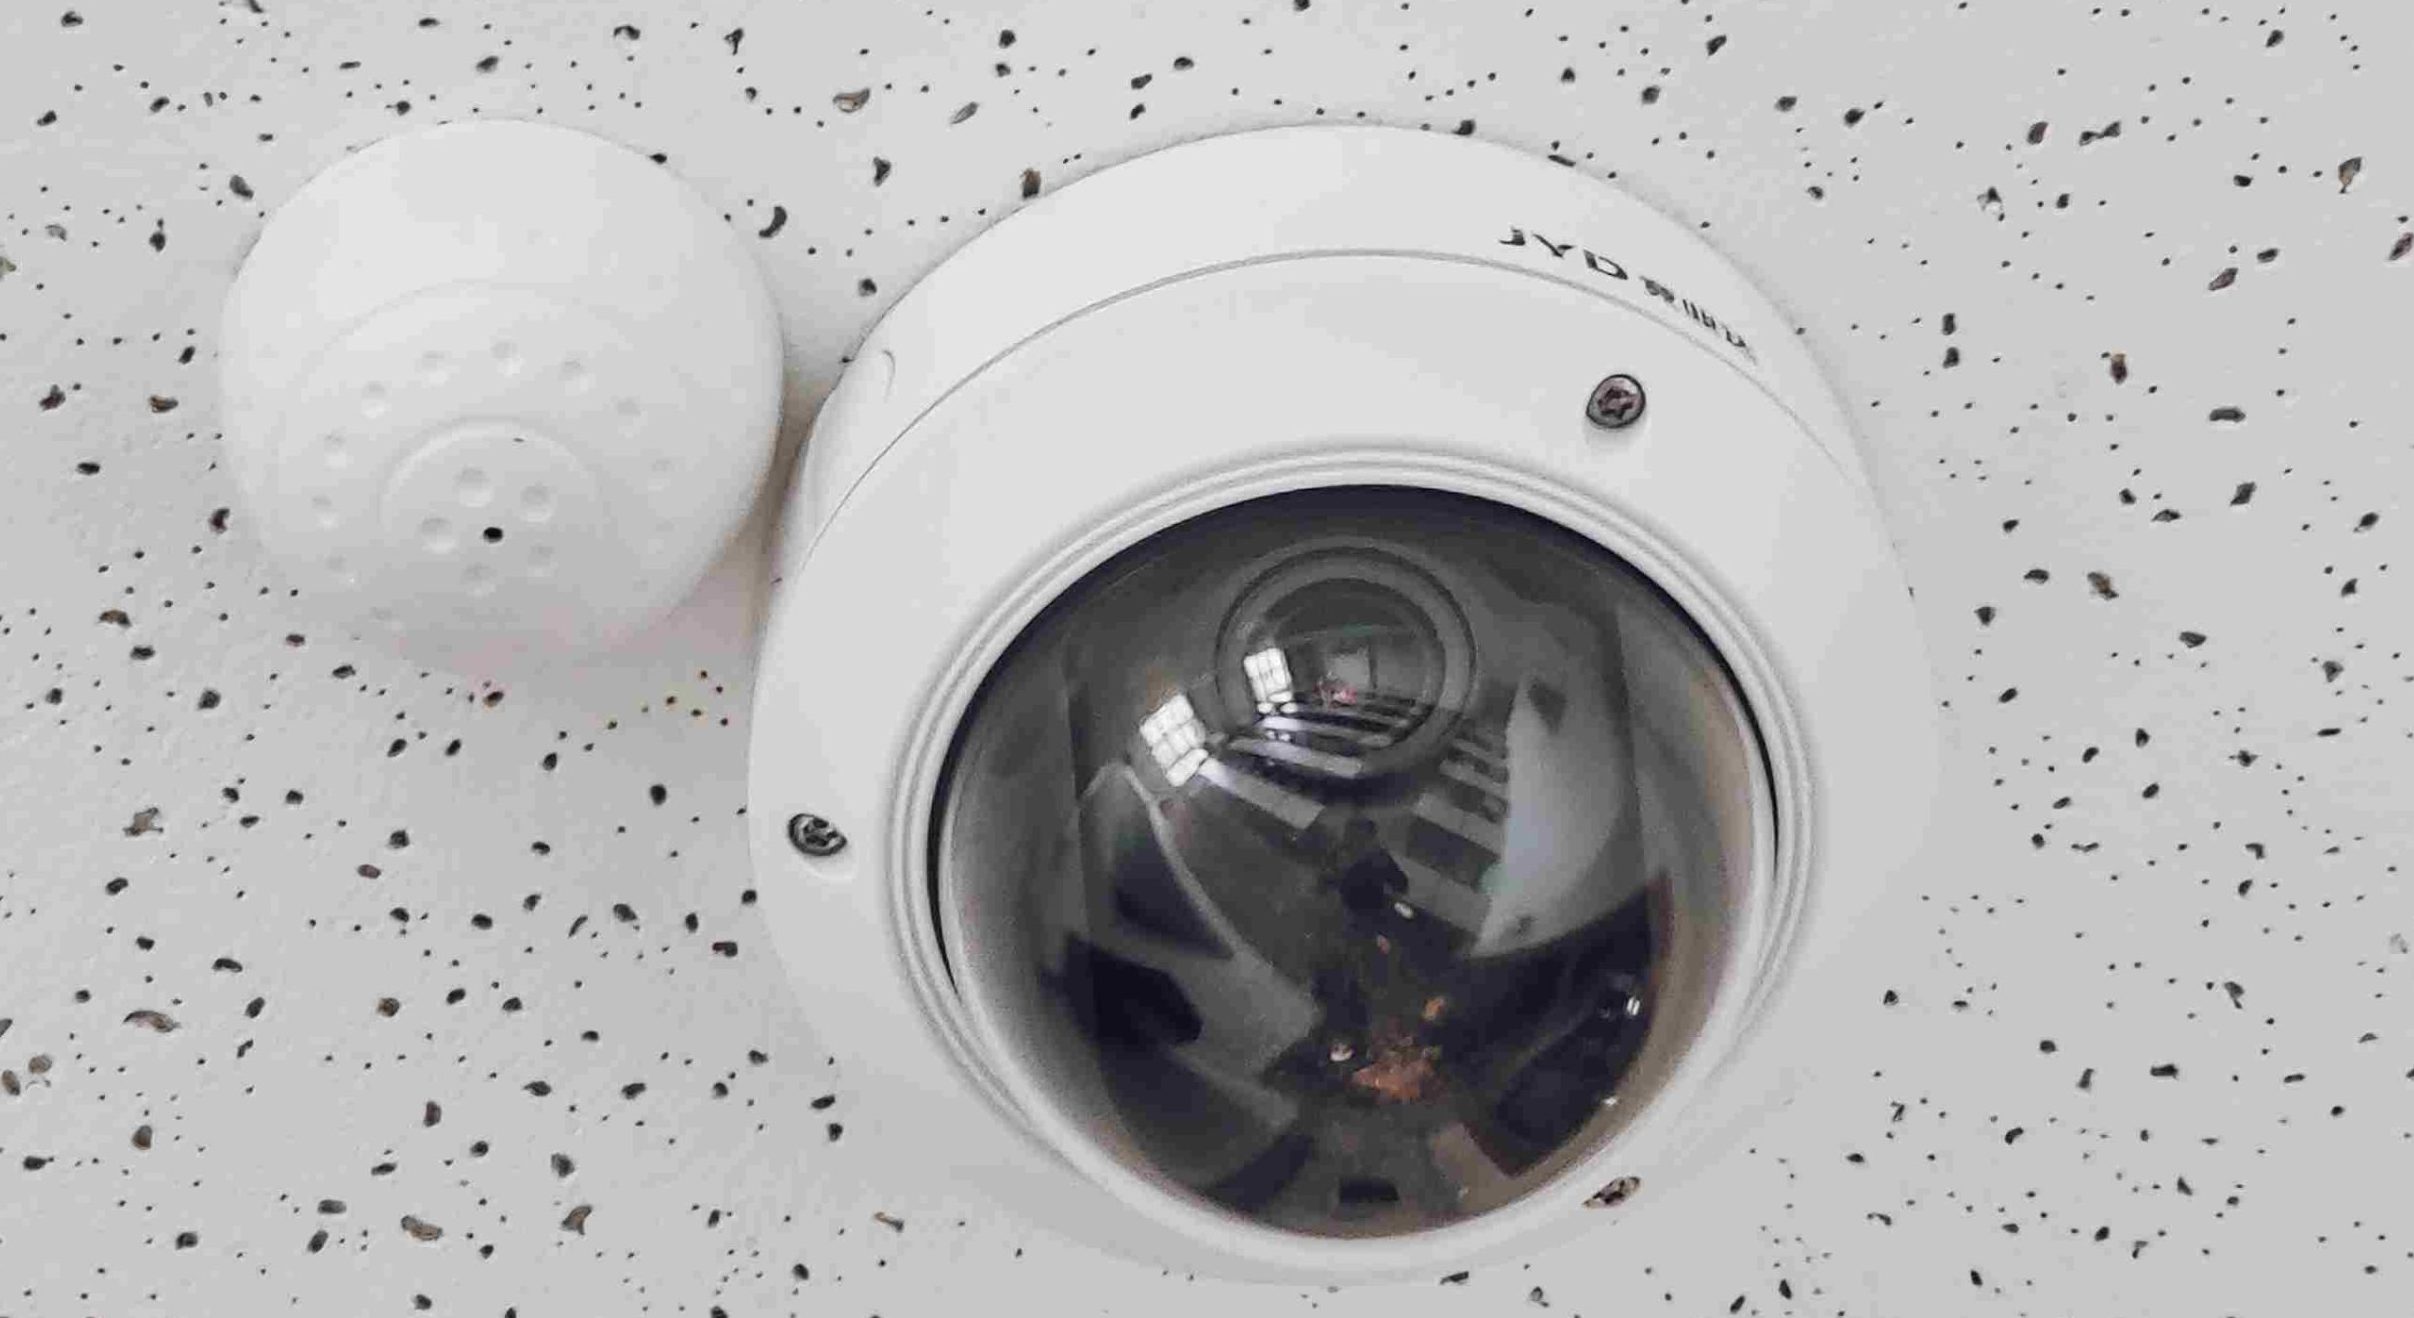 A Round White Cctv Camera on a white ceiling